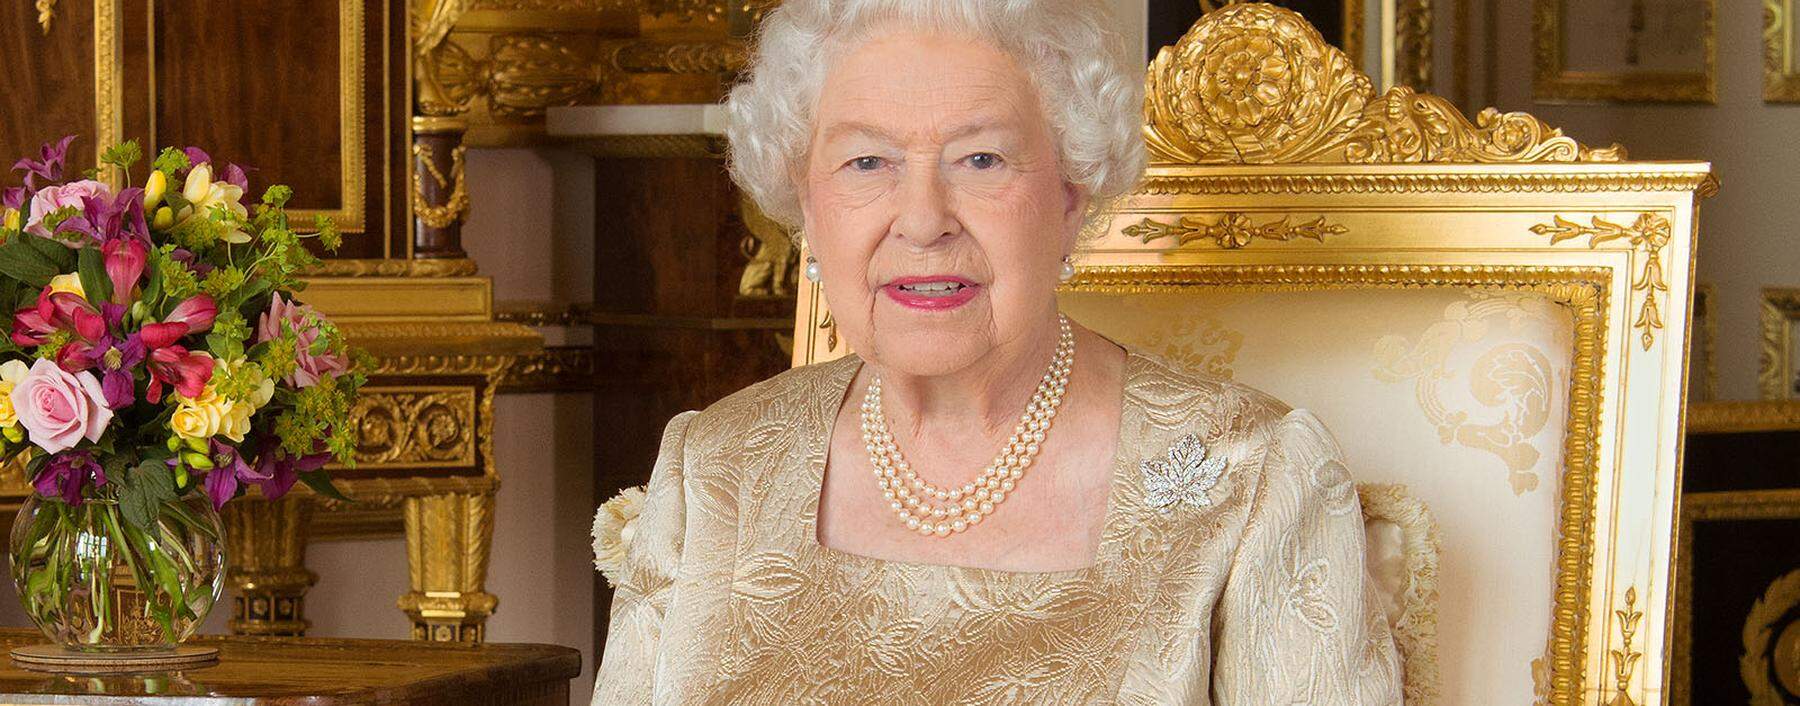 Queen Elizabeth regiert seit 68 Jahren. Mehrere Generationen bereits kennen kein anderes britisches Staatsoberhaupt.